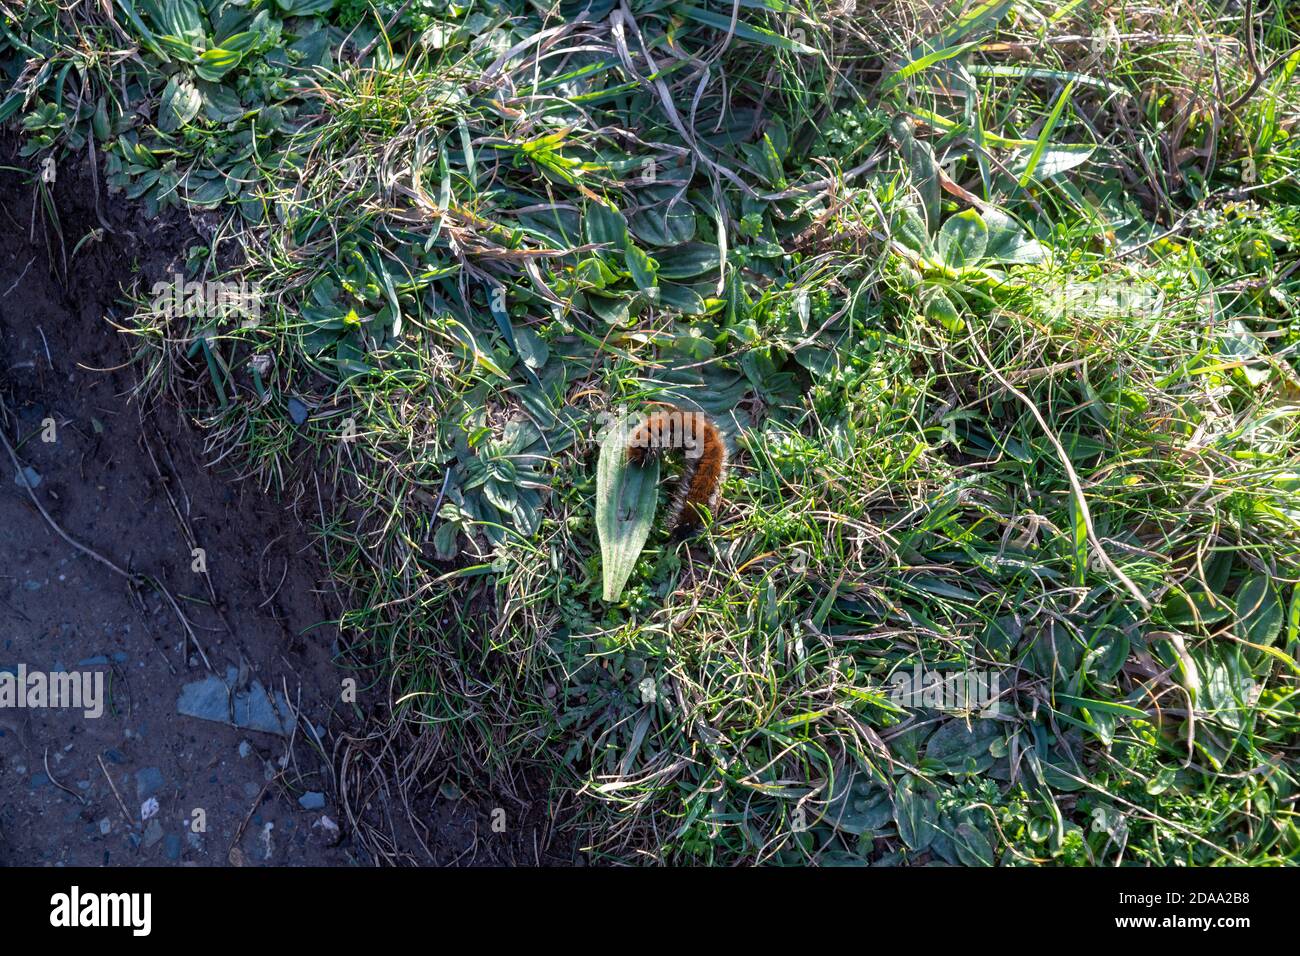 Cremespot Tigermotte Raupe auf Gras Stockfoto